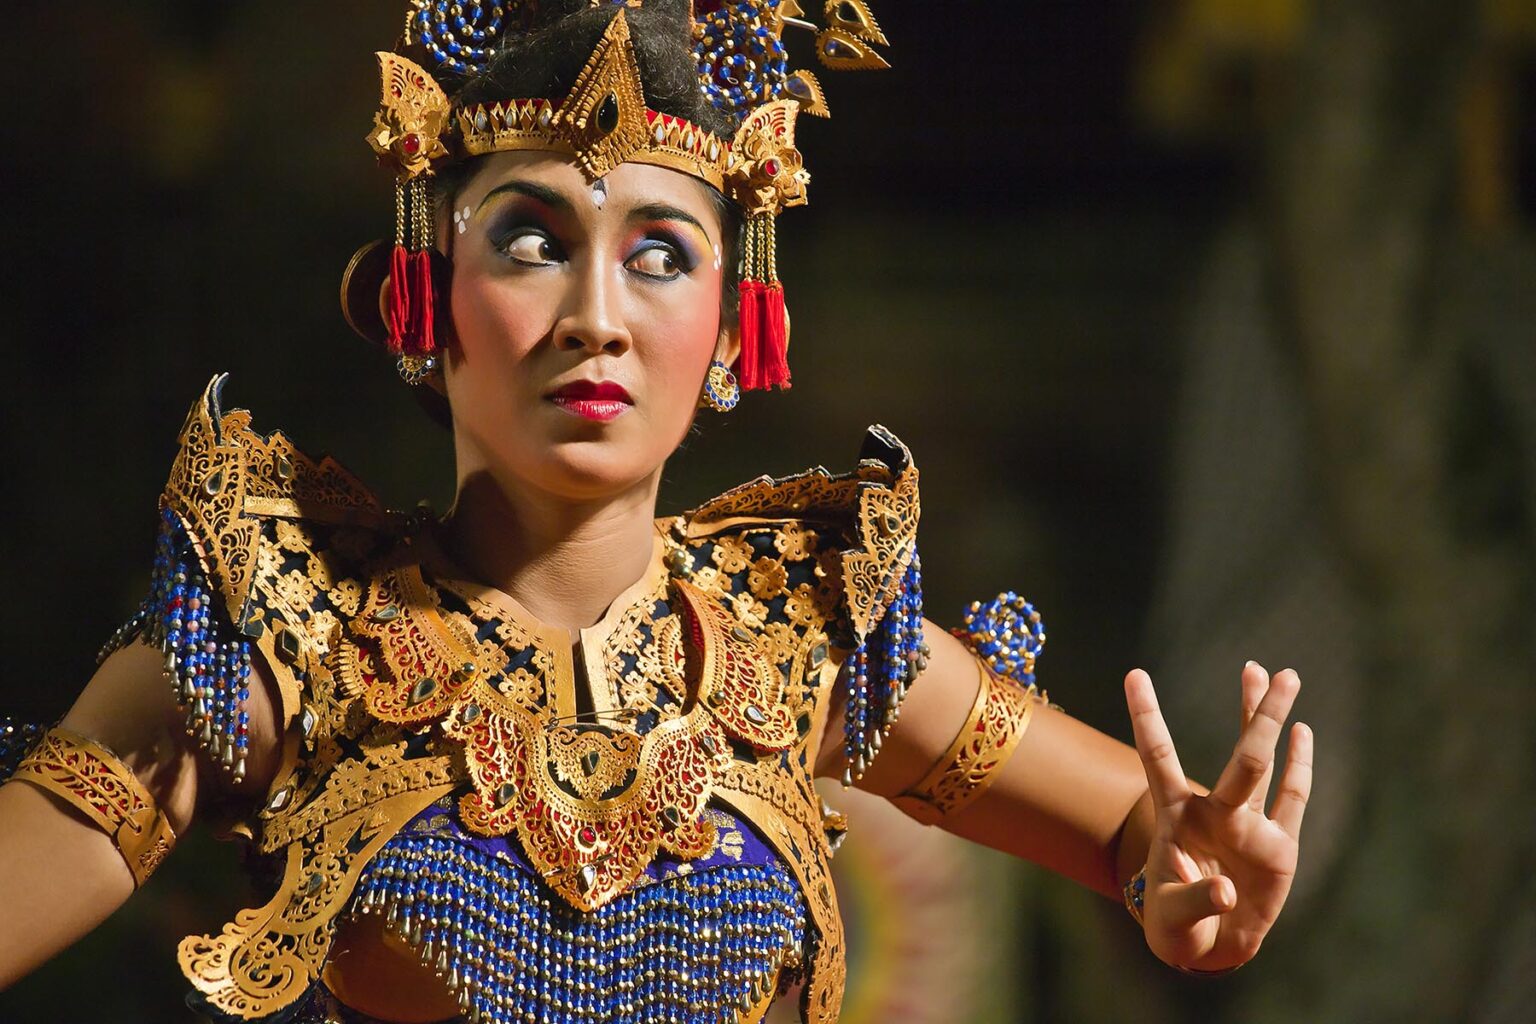 The KEBYAR DUDUK DANCE is performed by the Cenik Wayah Gamelan Dance Group at PURA TAMAN SARASWATI - UBUD, BALI, INDONESIA